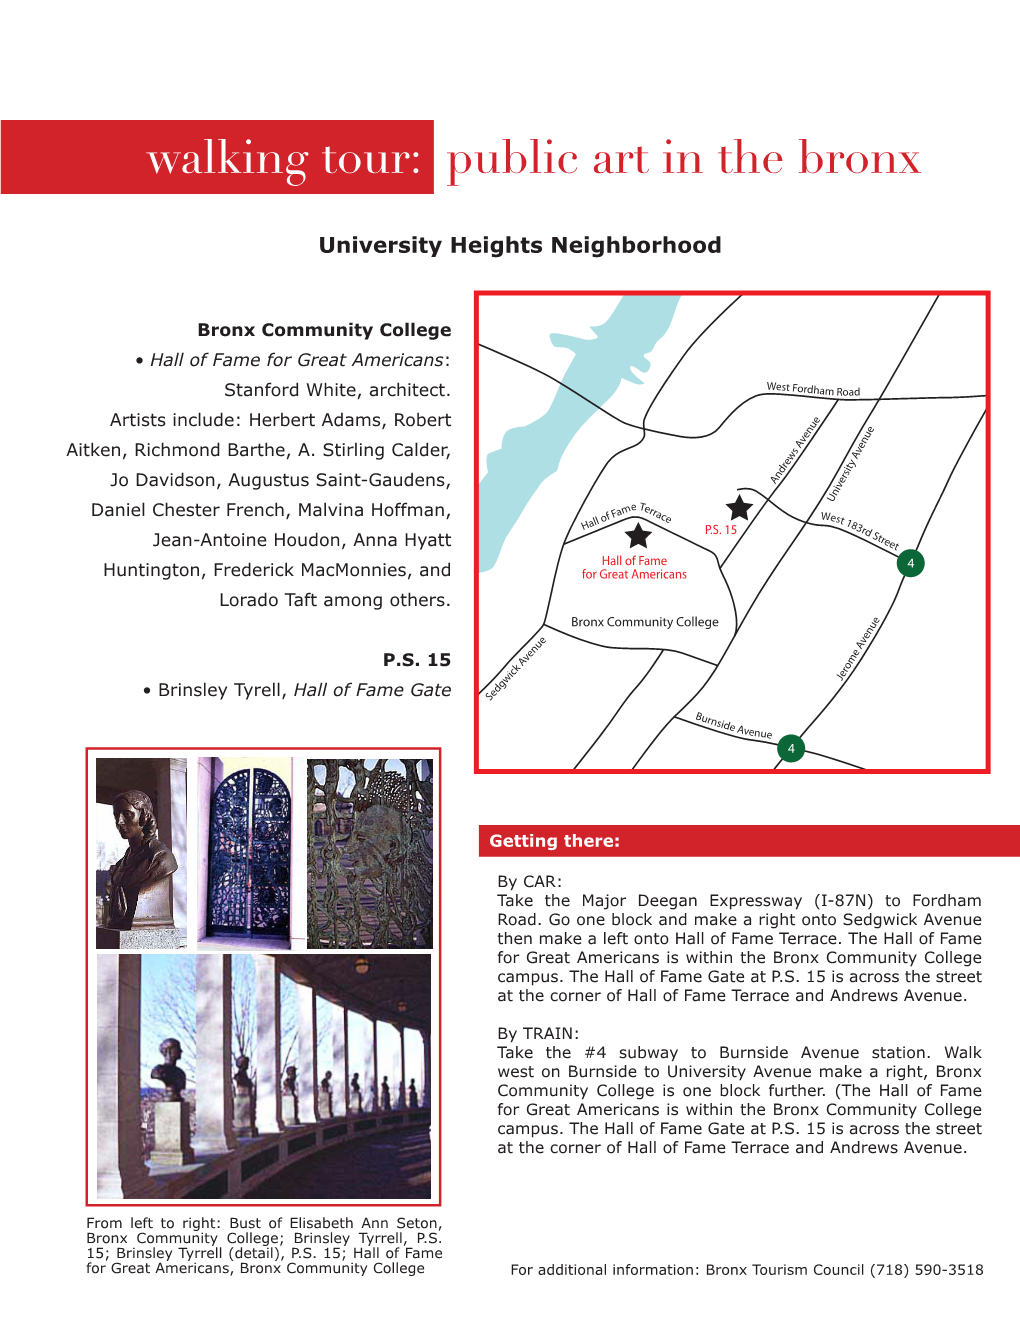 Walking Tour: Public Art in the Bronx